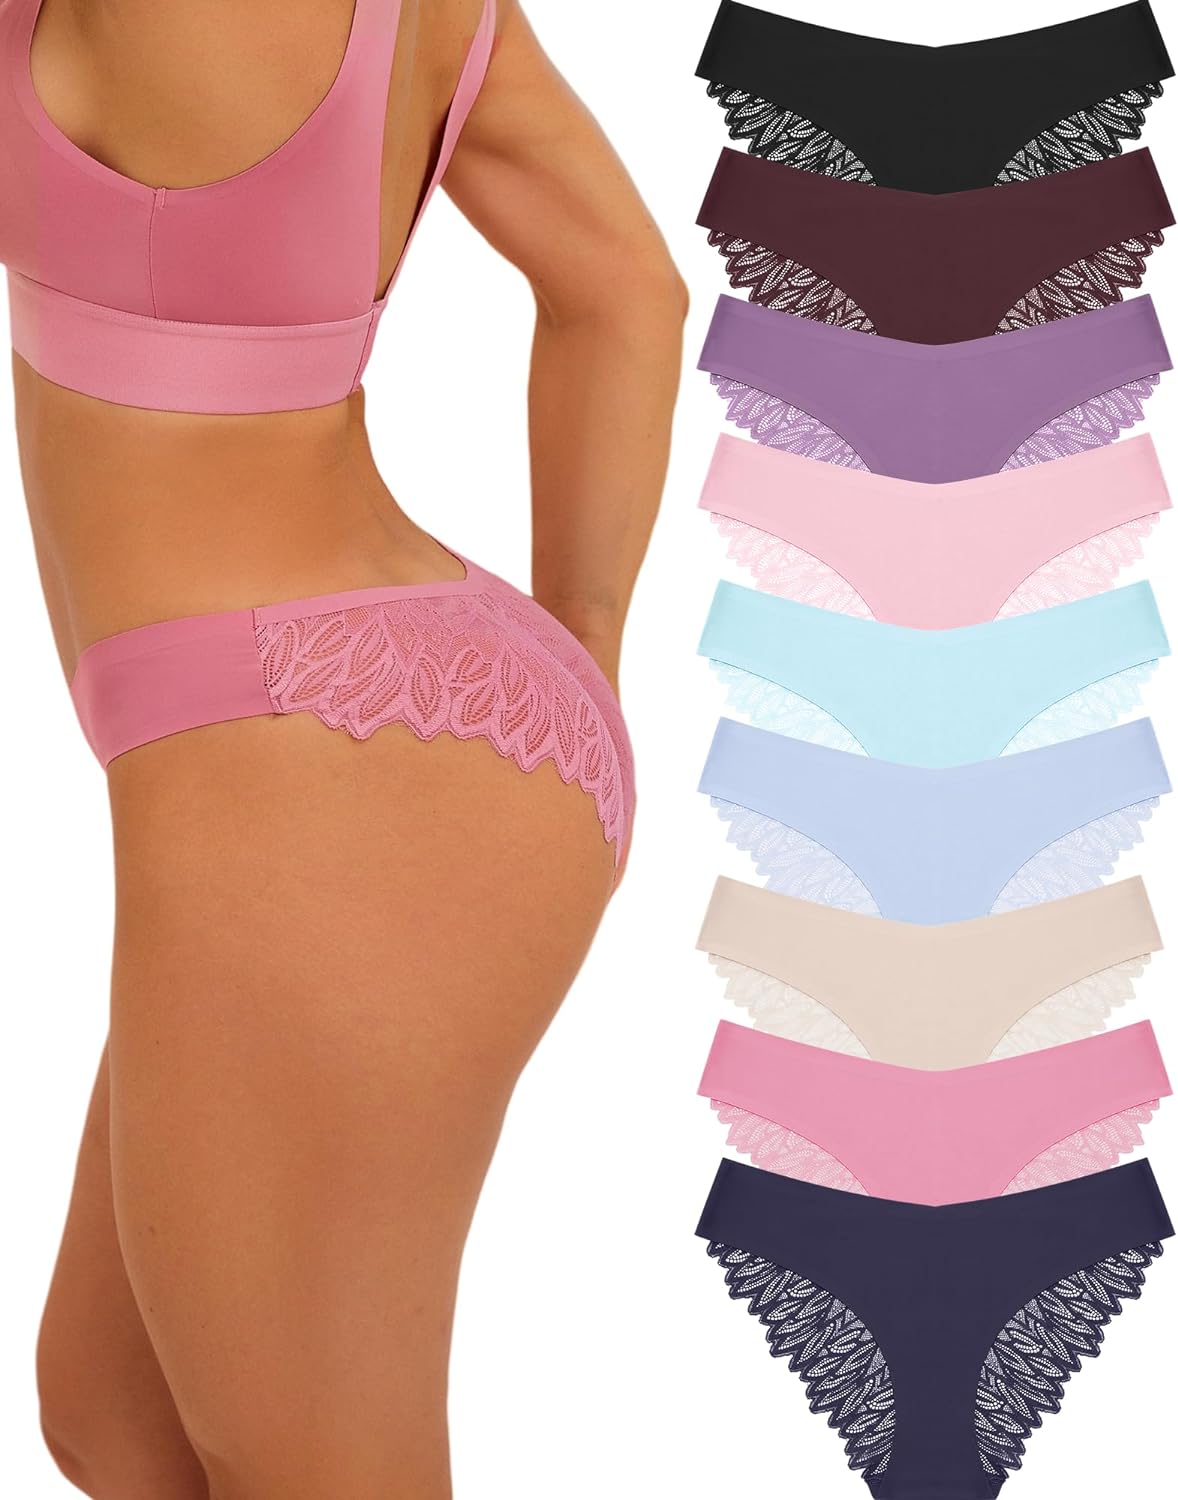 ROSYCORAL 9 Pack Womens Underwear Seamless Bikini Panties Soft